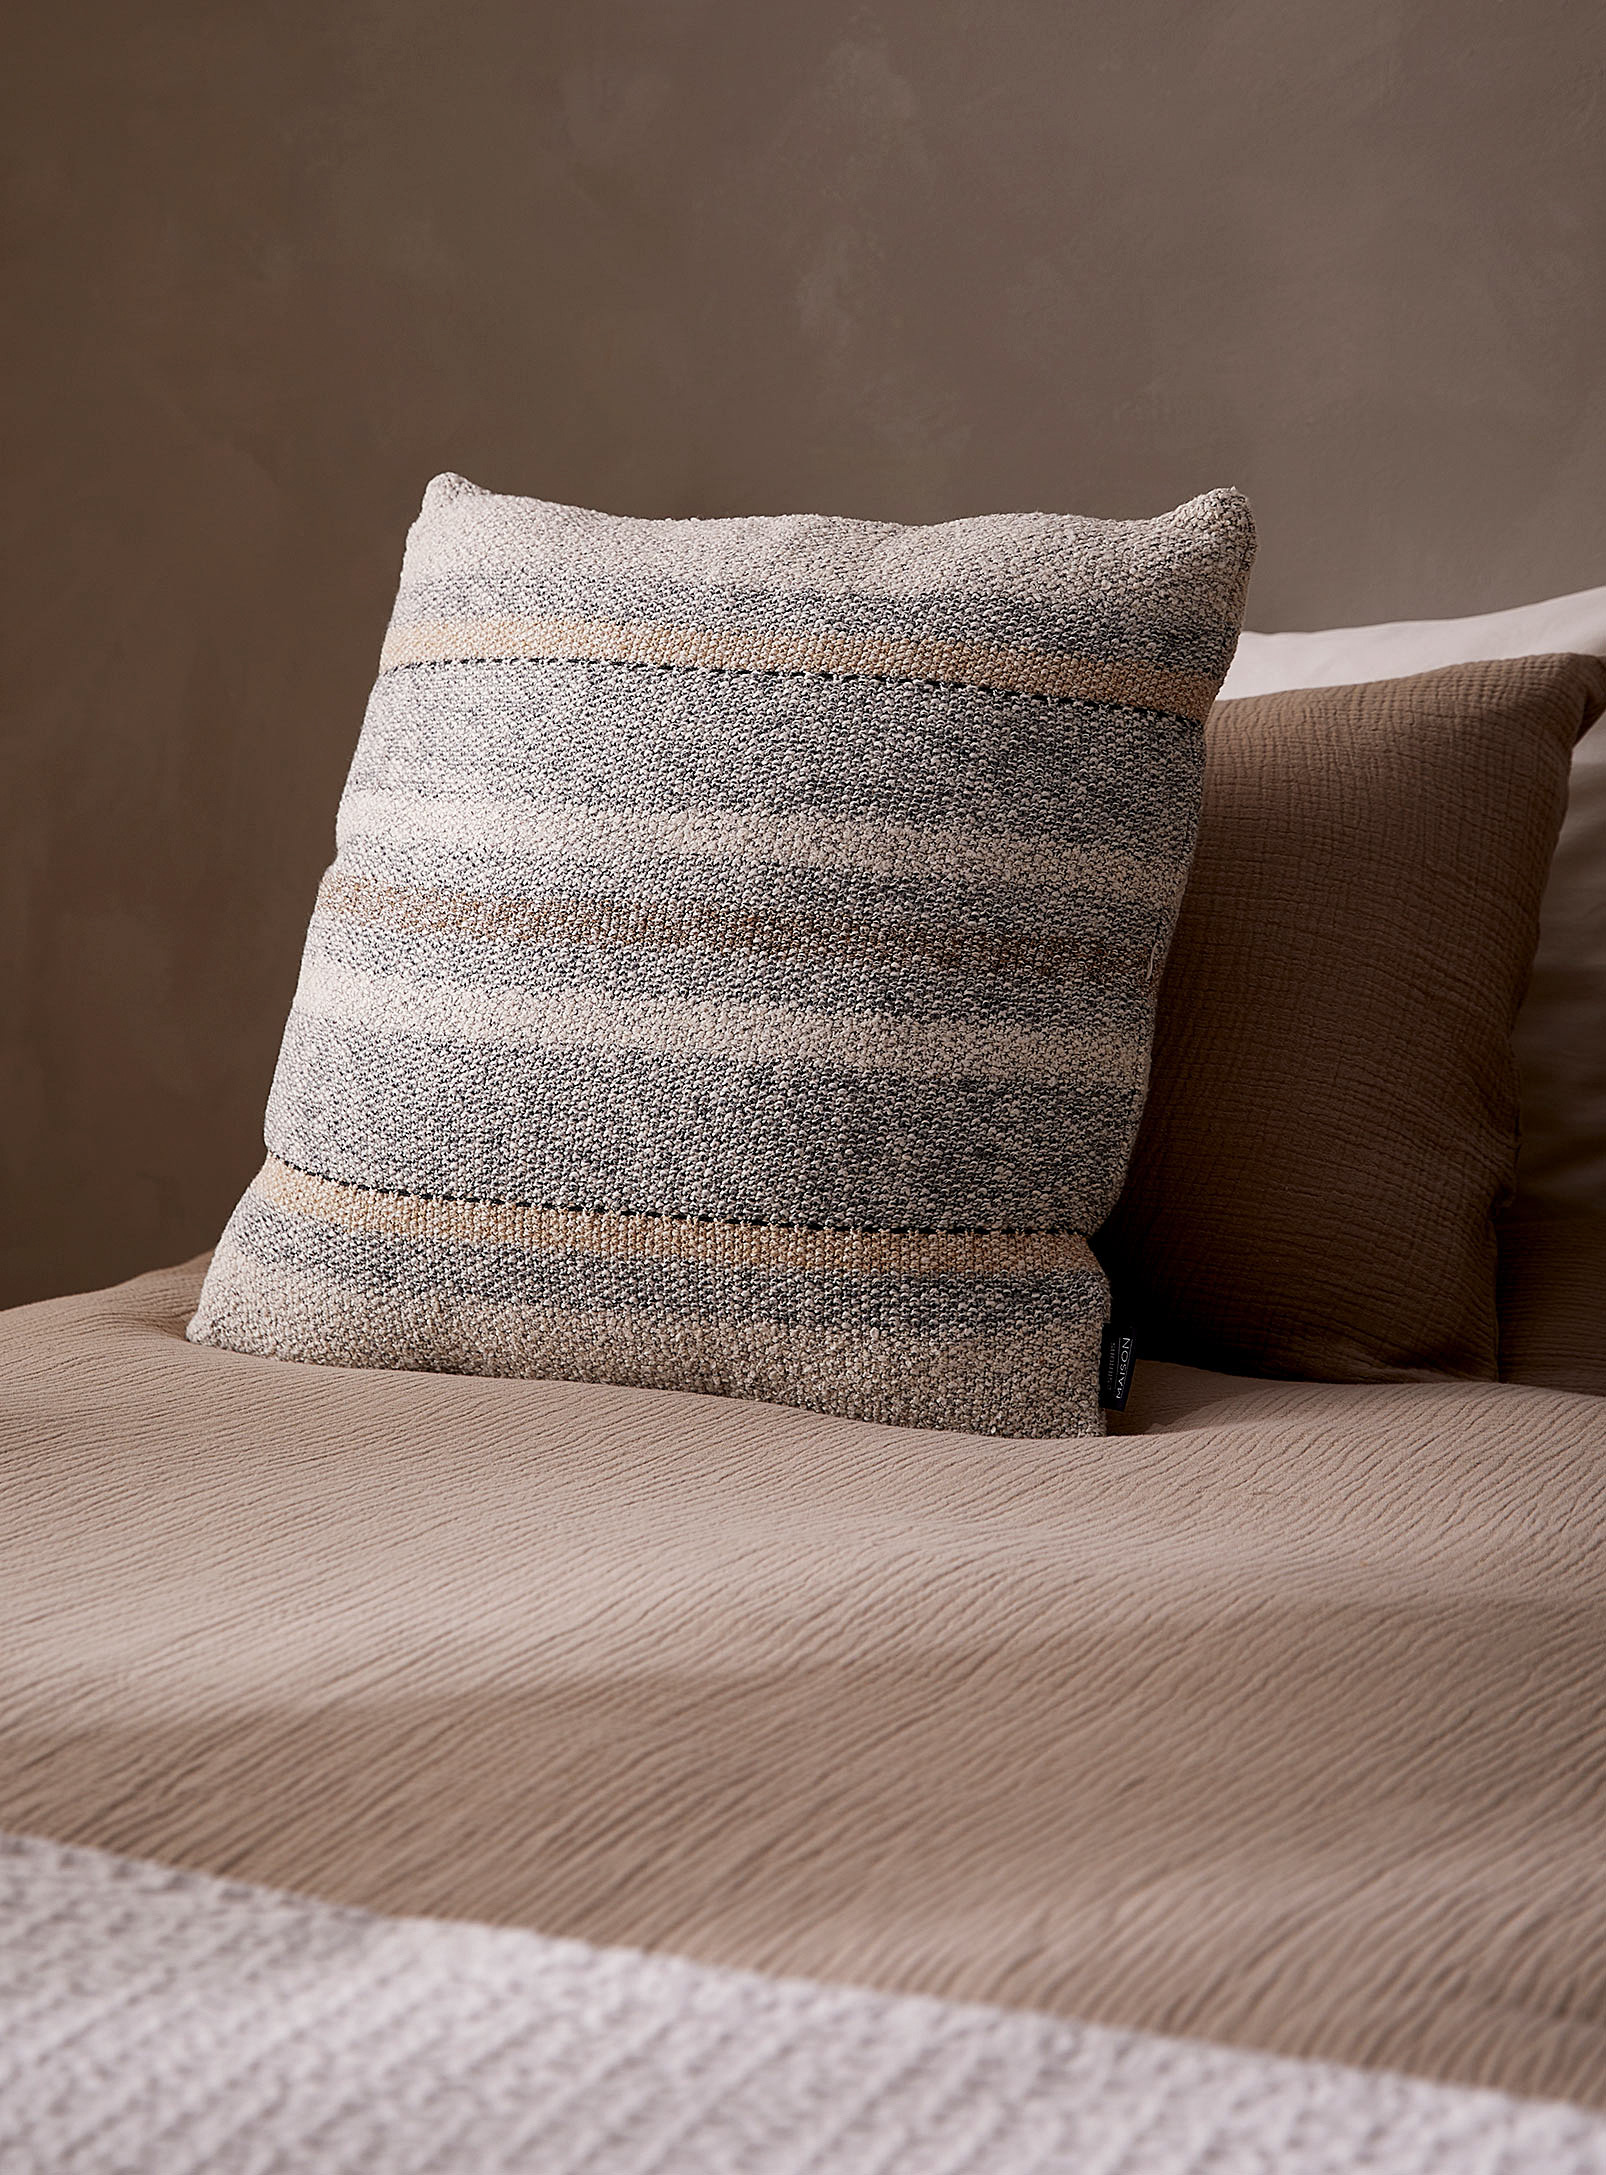 Simons Maison - Earth tones knit cushion 50 x 50 cm